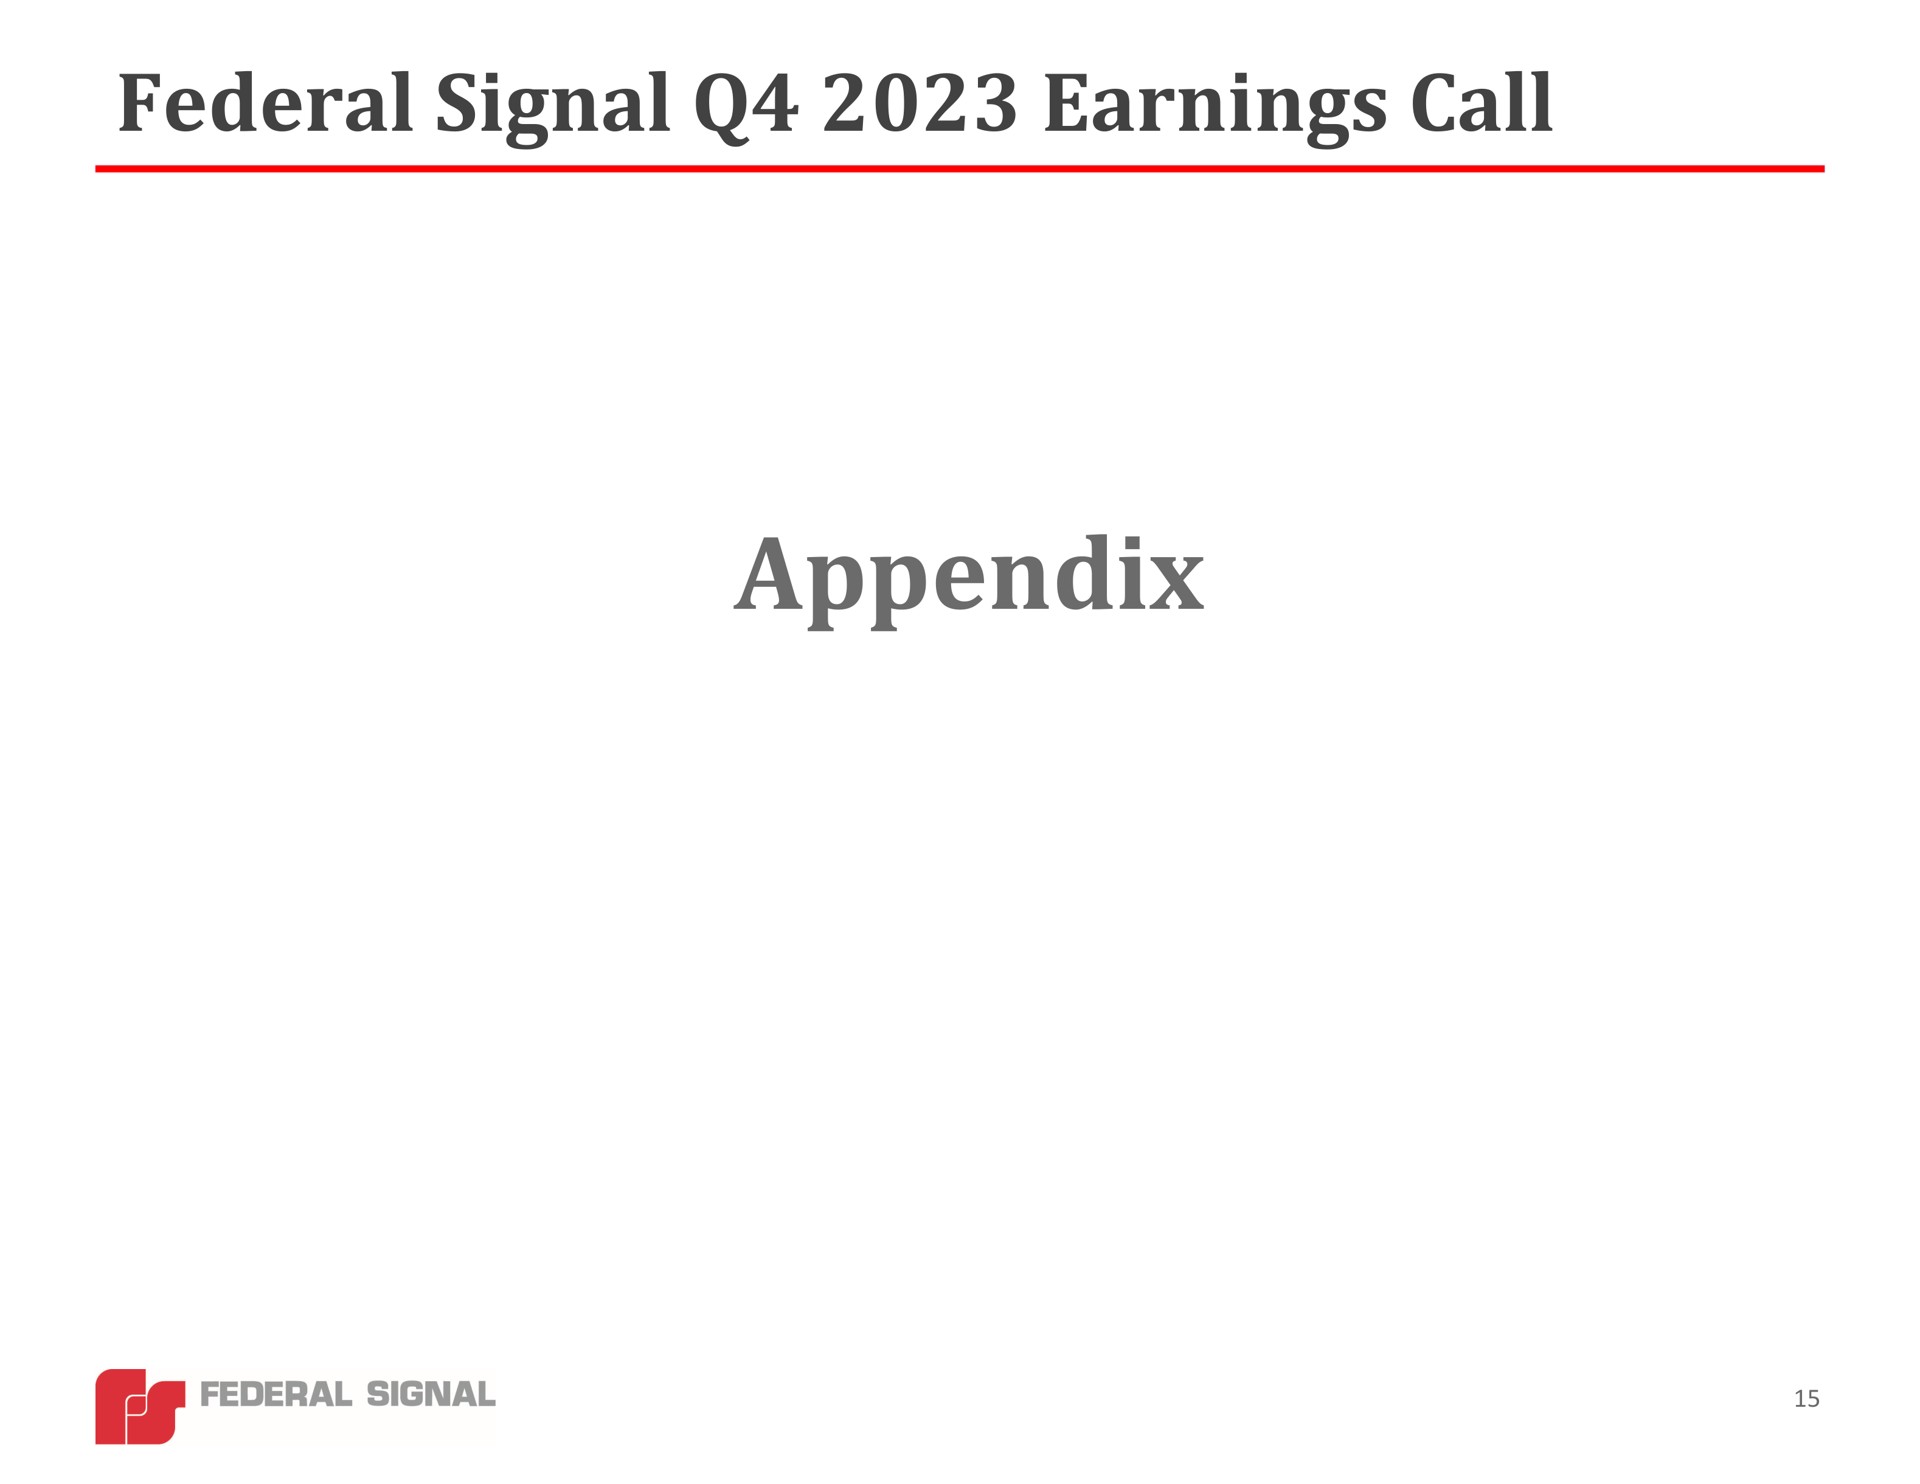 federal signal earnings call appendix | Federal Signal